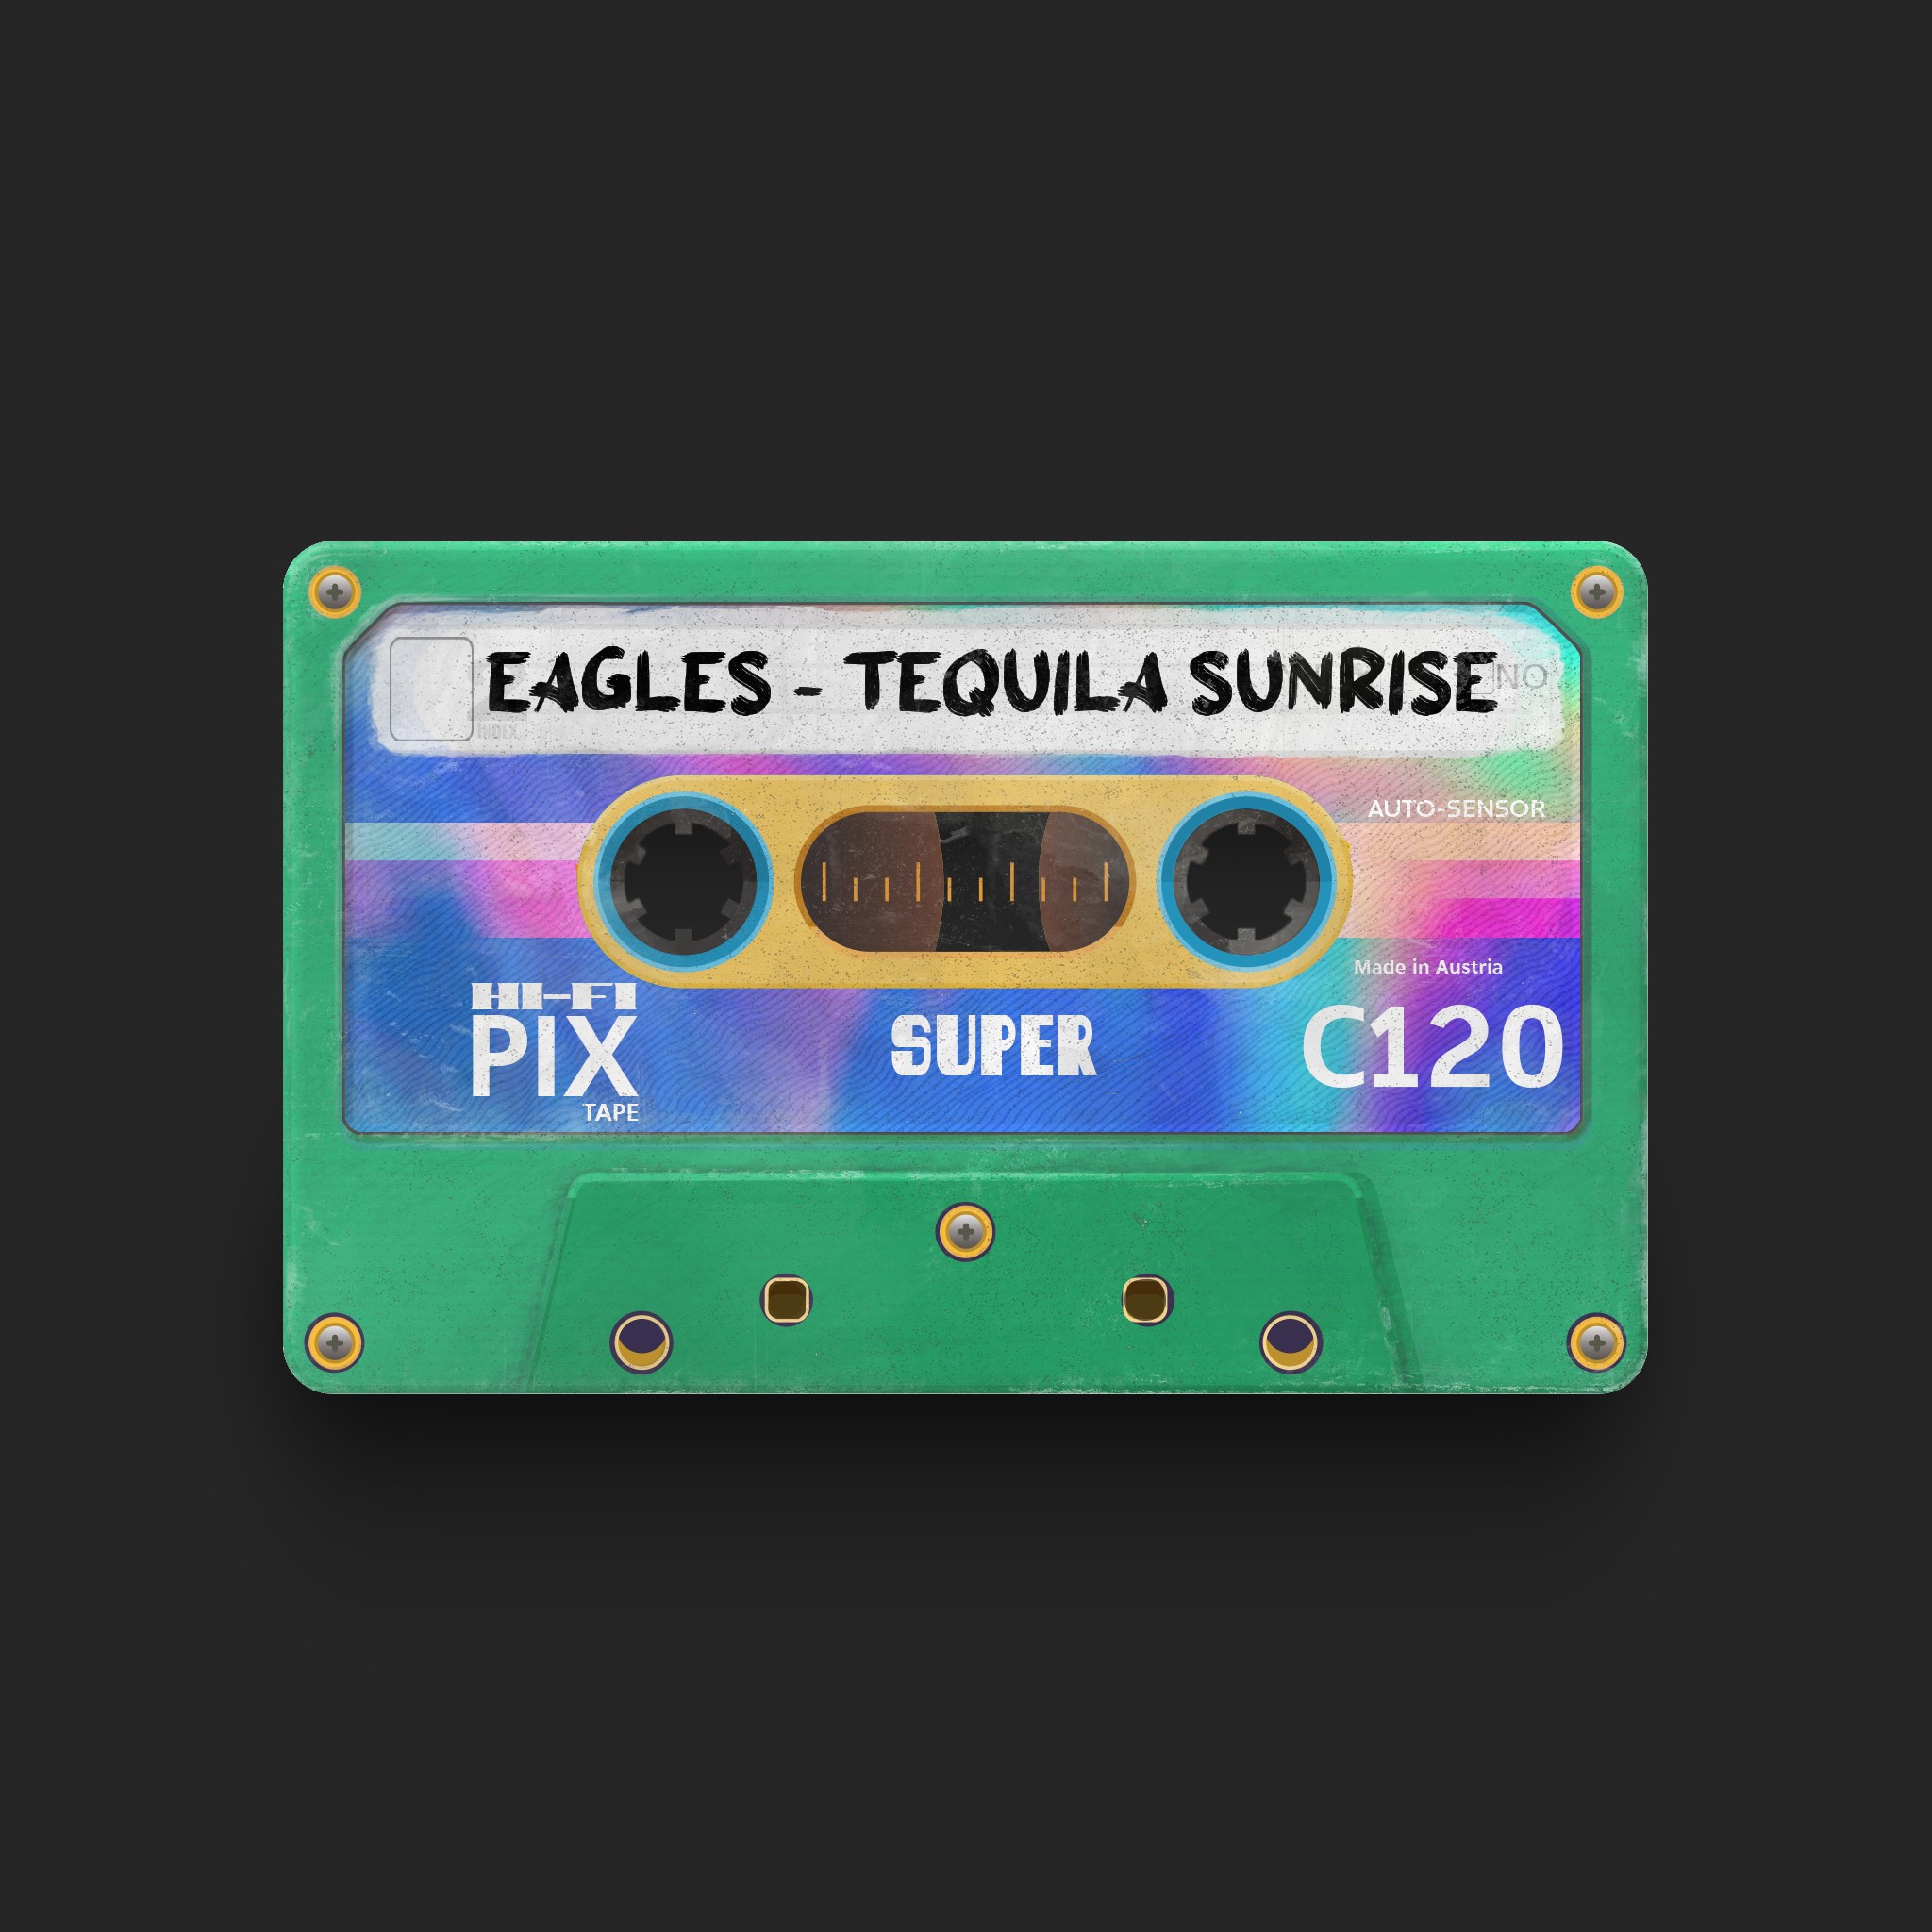 PixTape #5 | Eagles - Tequila Sunrise